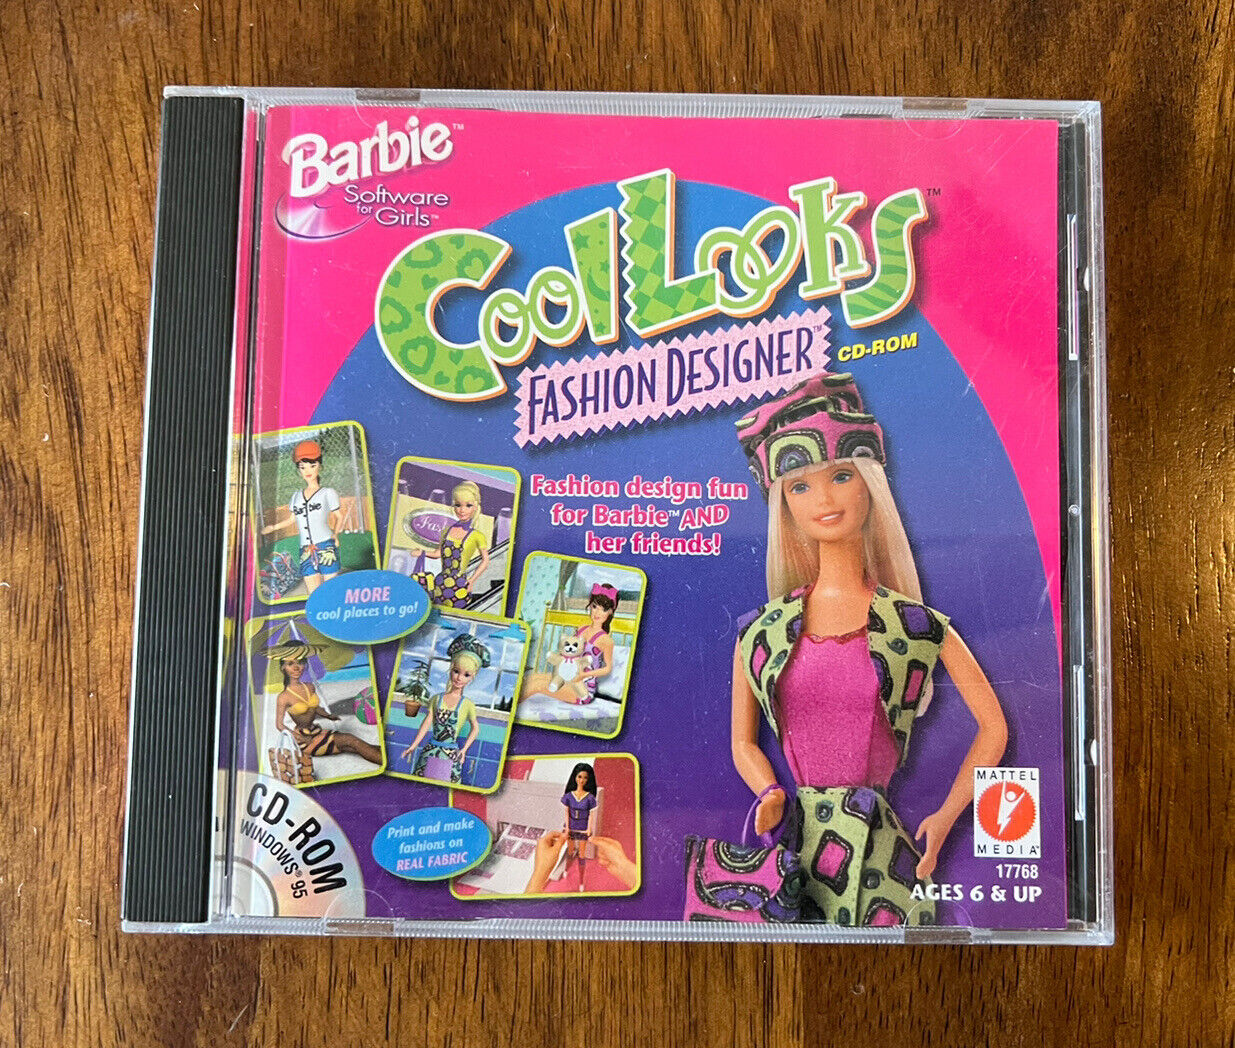 Cool Looks Barbie Fashion Designer CD-ROM (PC, 1997) Mattel Software for Girls